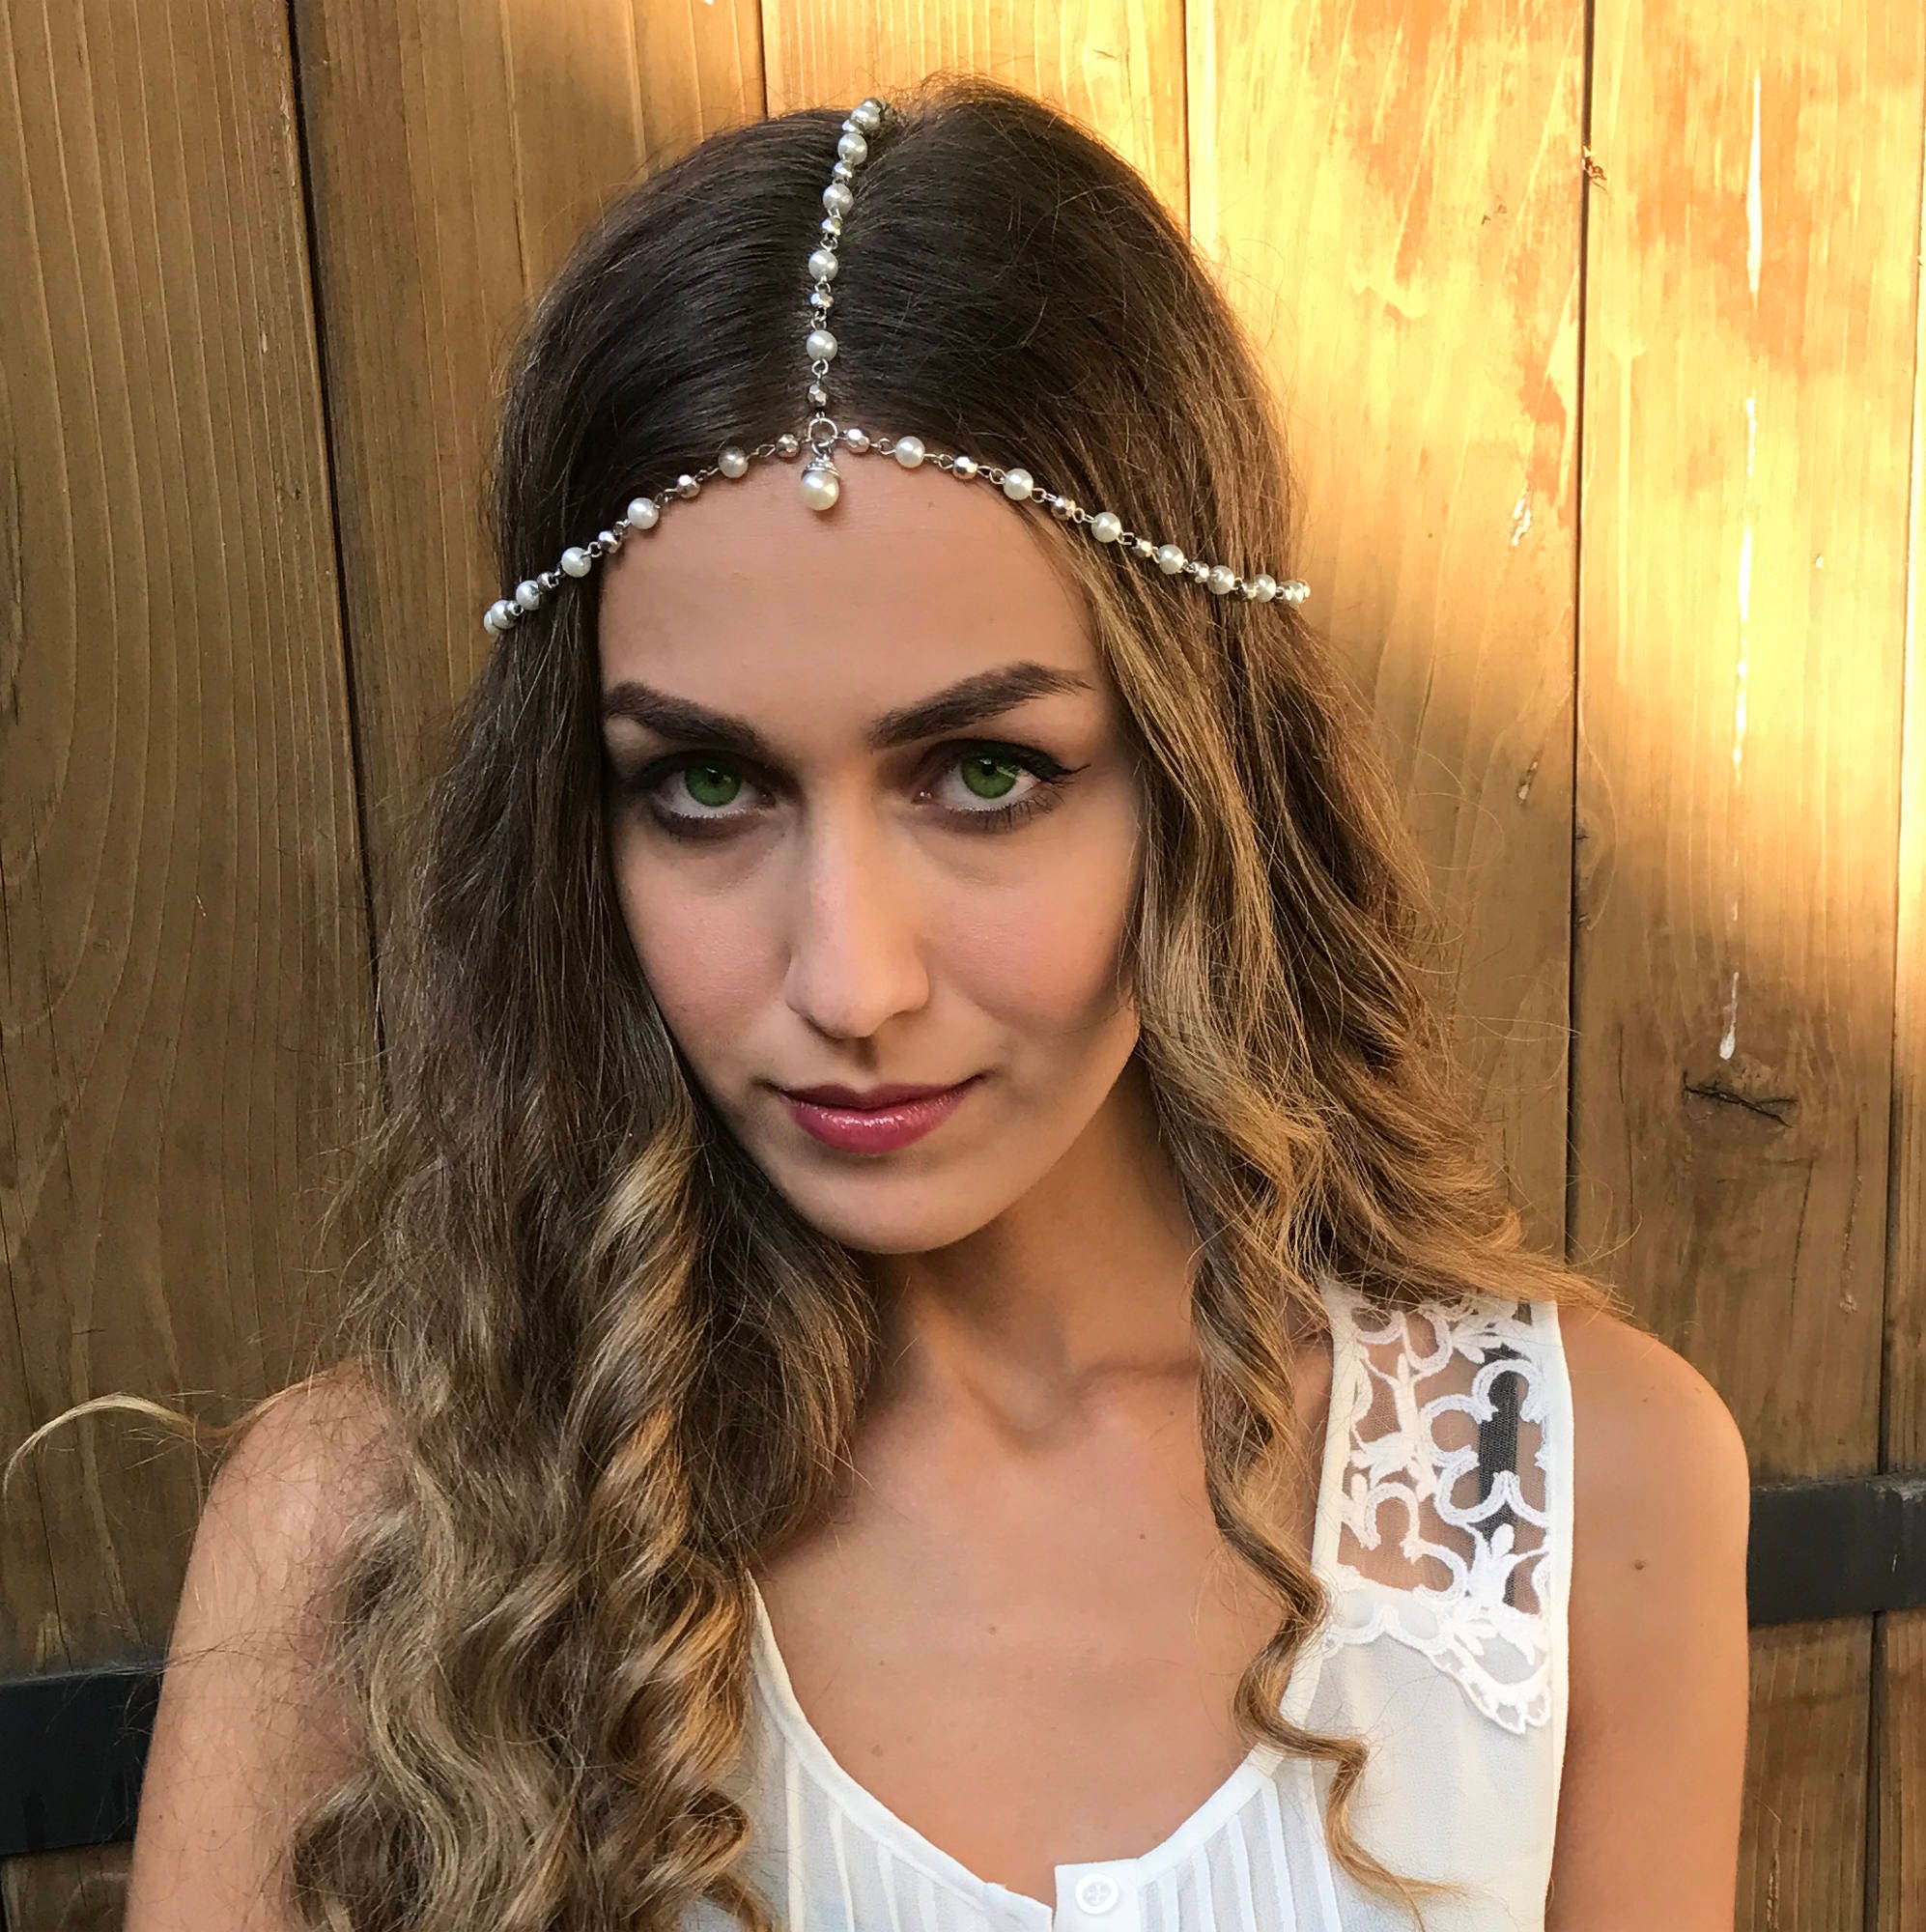 Bridal Headpiece Hair Chain, Head Chain, Pearl Headdress, Gypsy Head Piece,  Wedding Accessories, Lu'lu' 